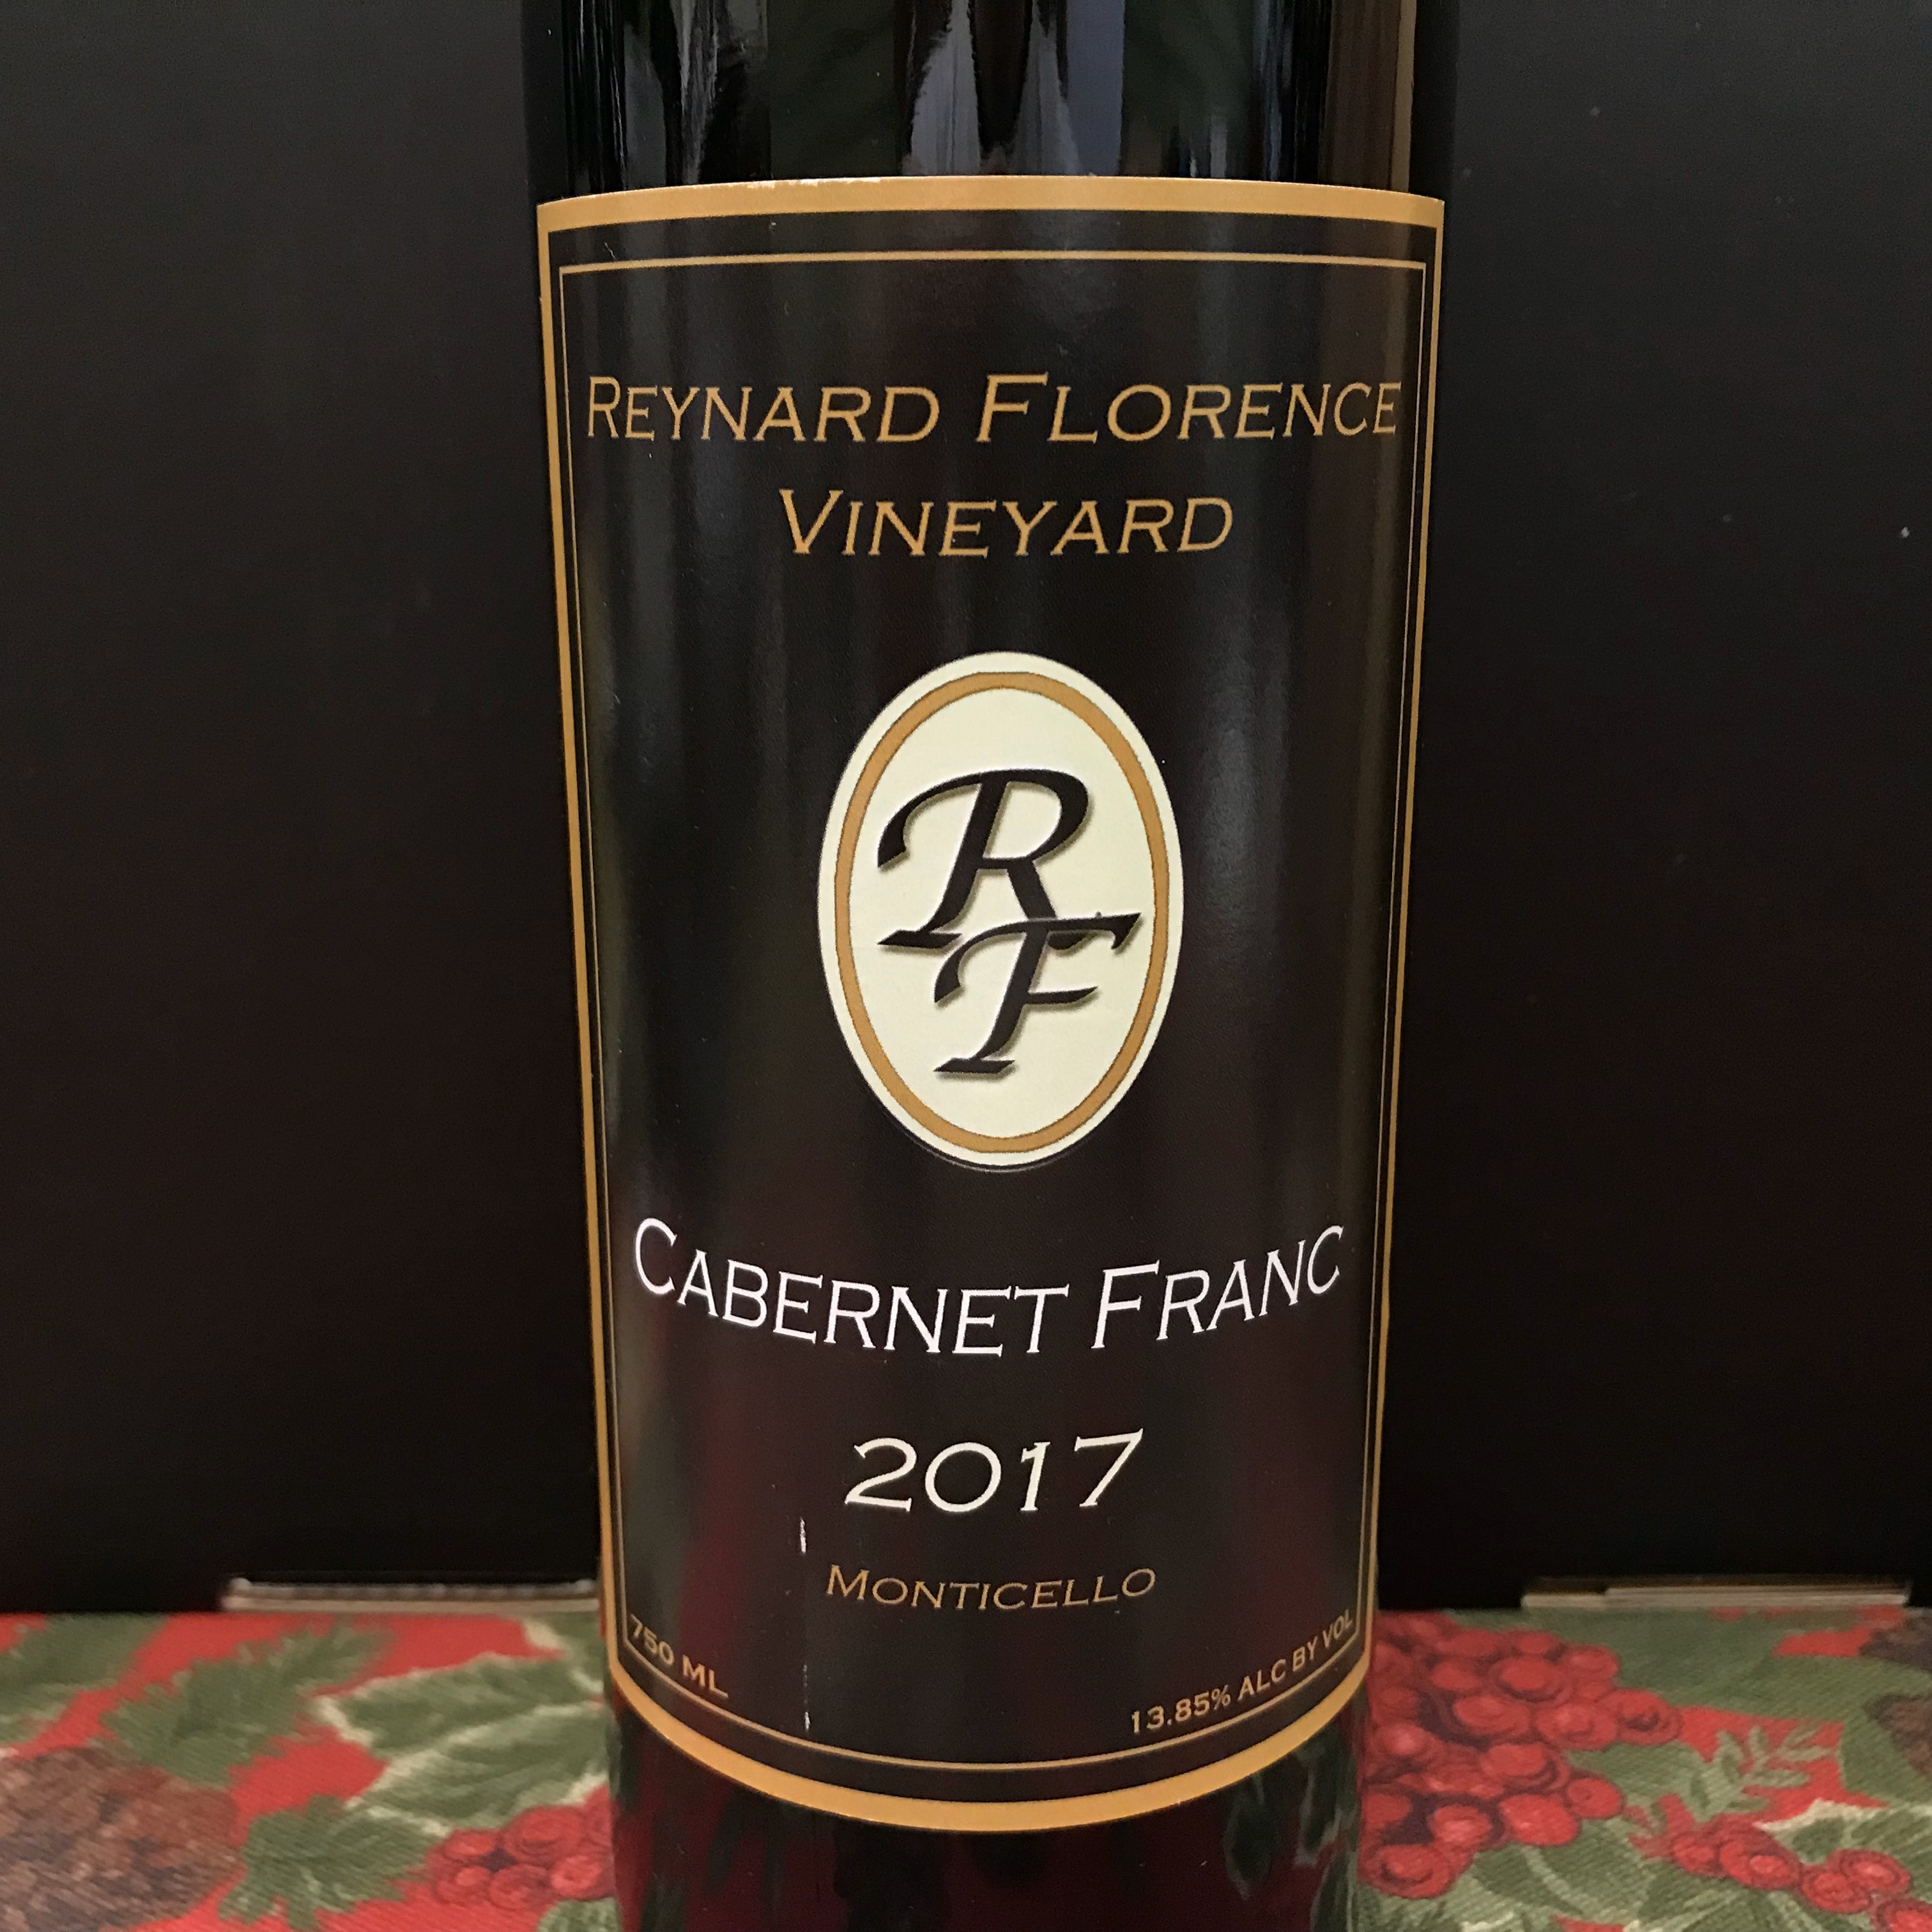 Reynard Florence Cabernet Franc Monticello 2017